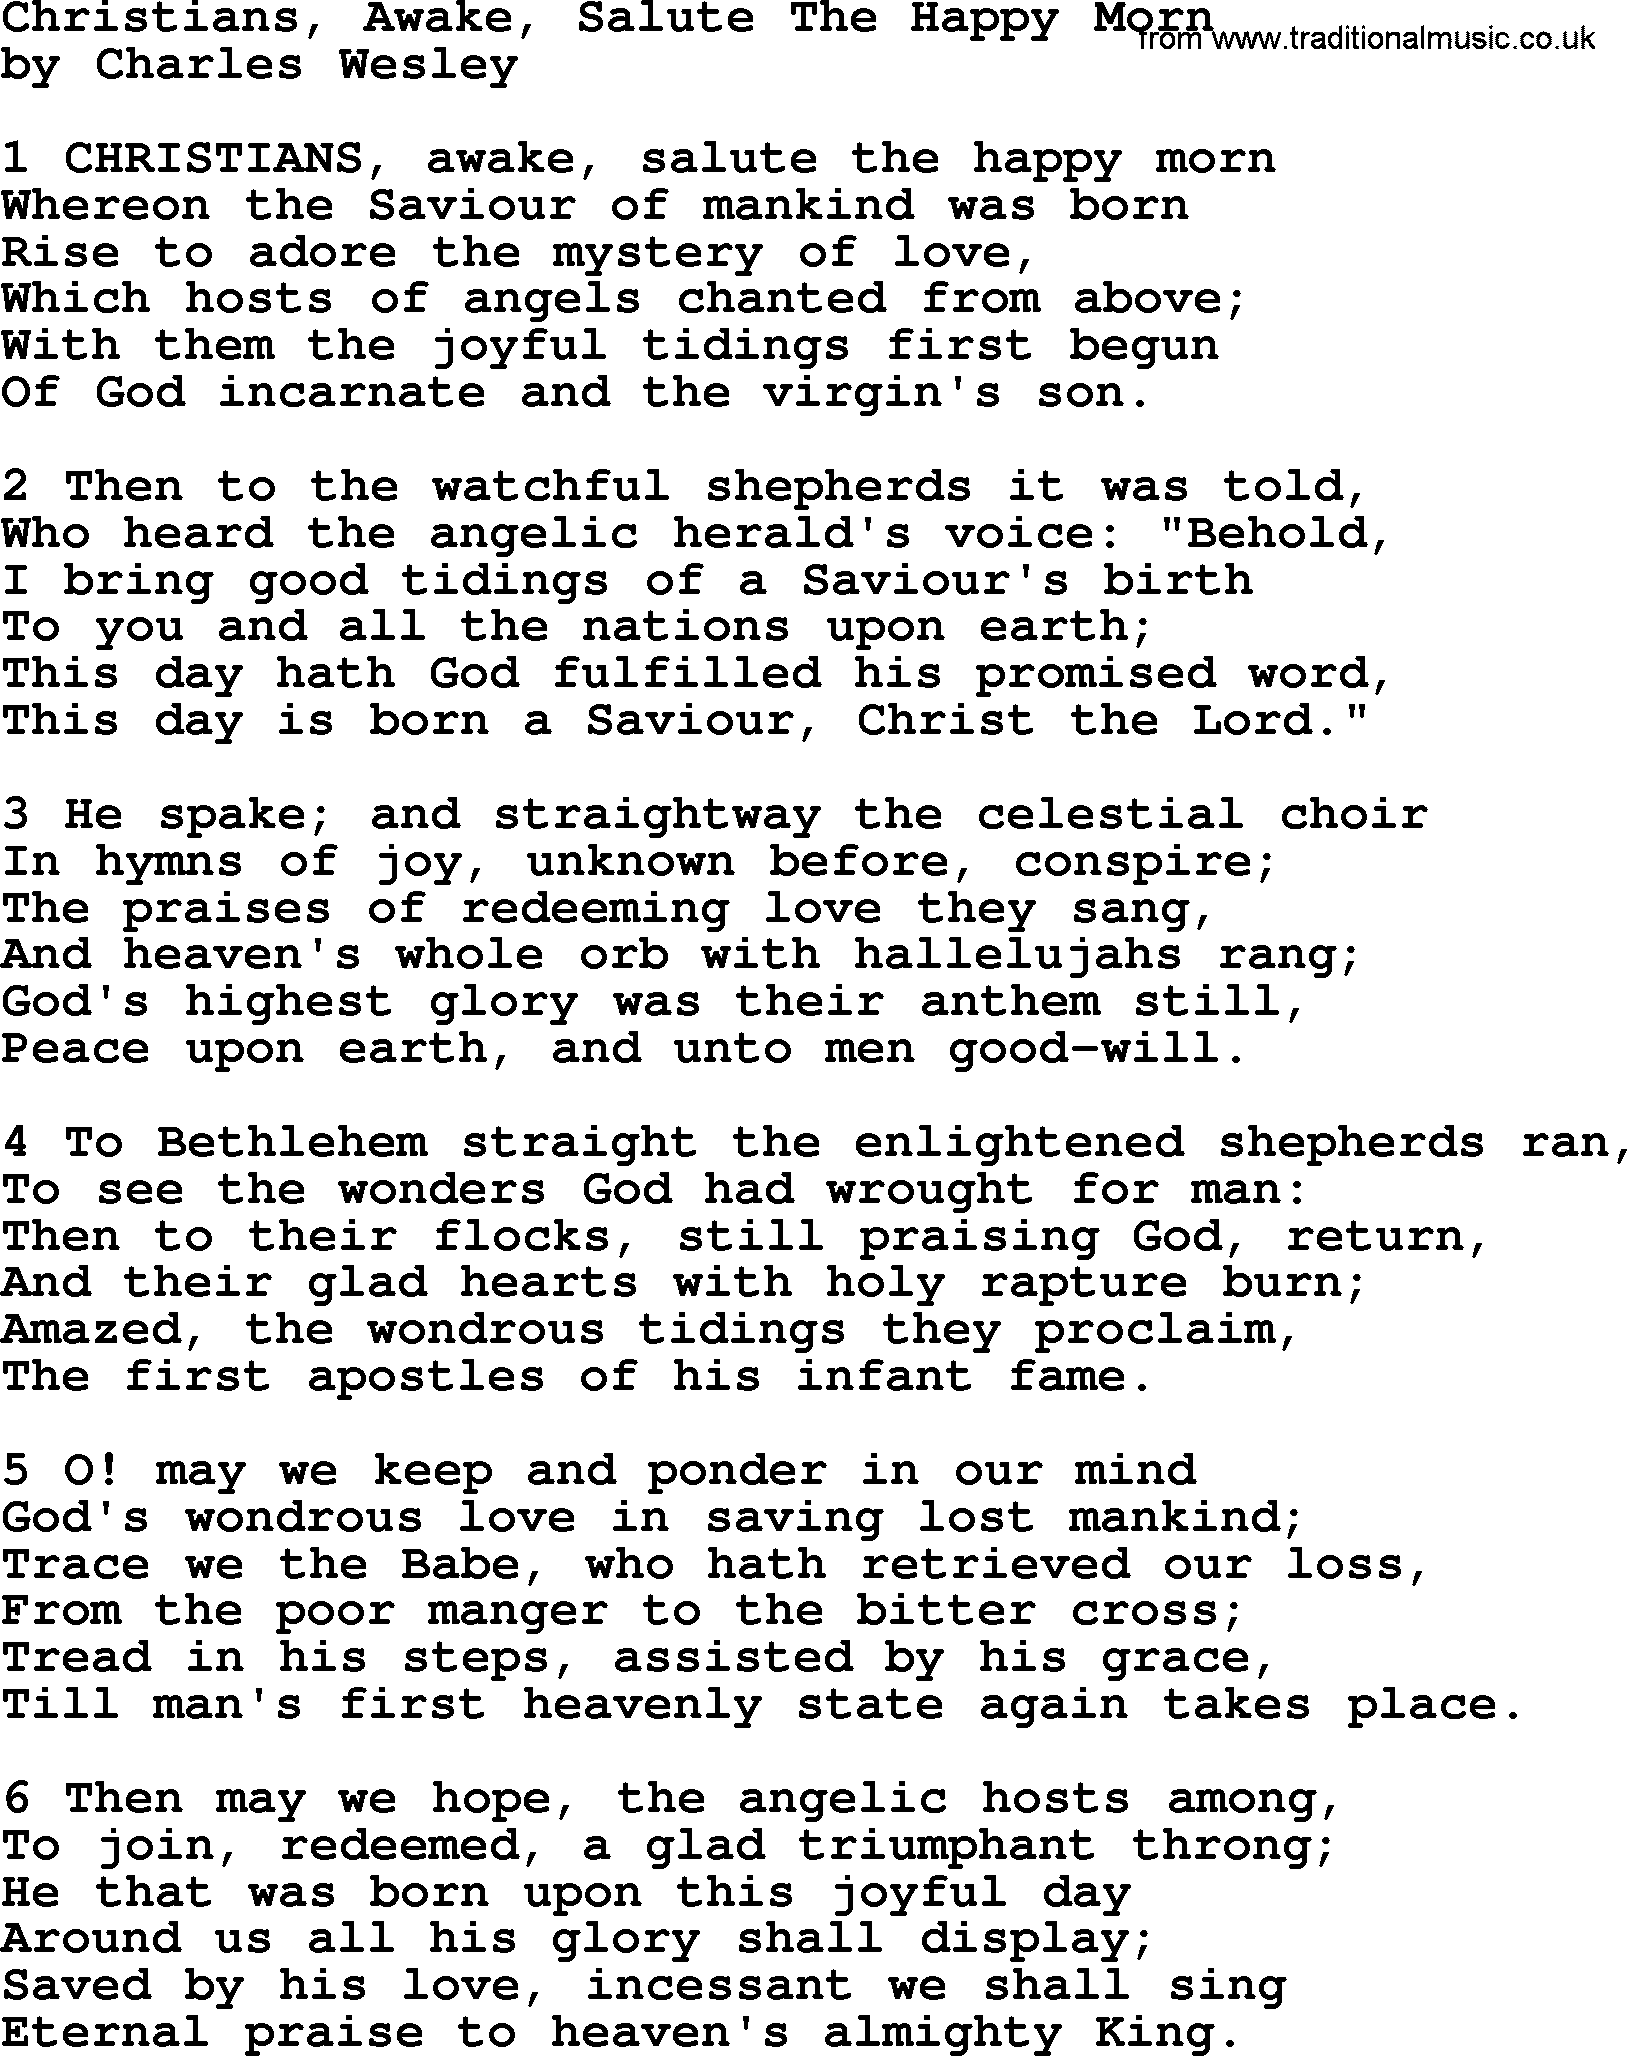 Charles Wesley hymn: Christians, Awake, Salute The Happy Morn, lyrics